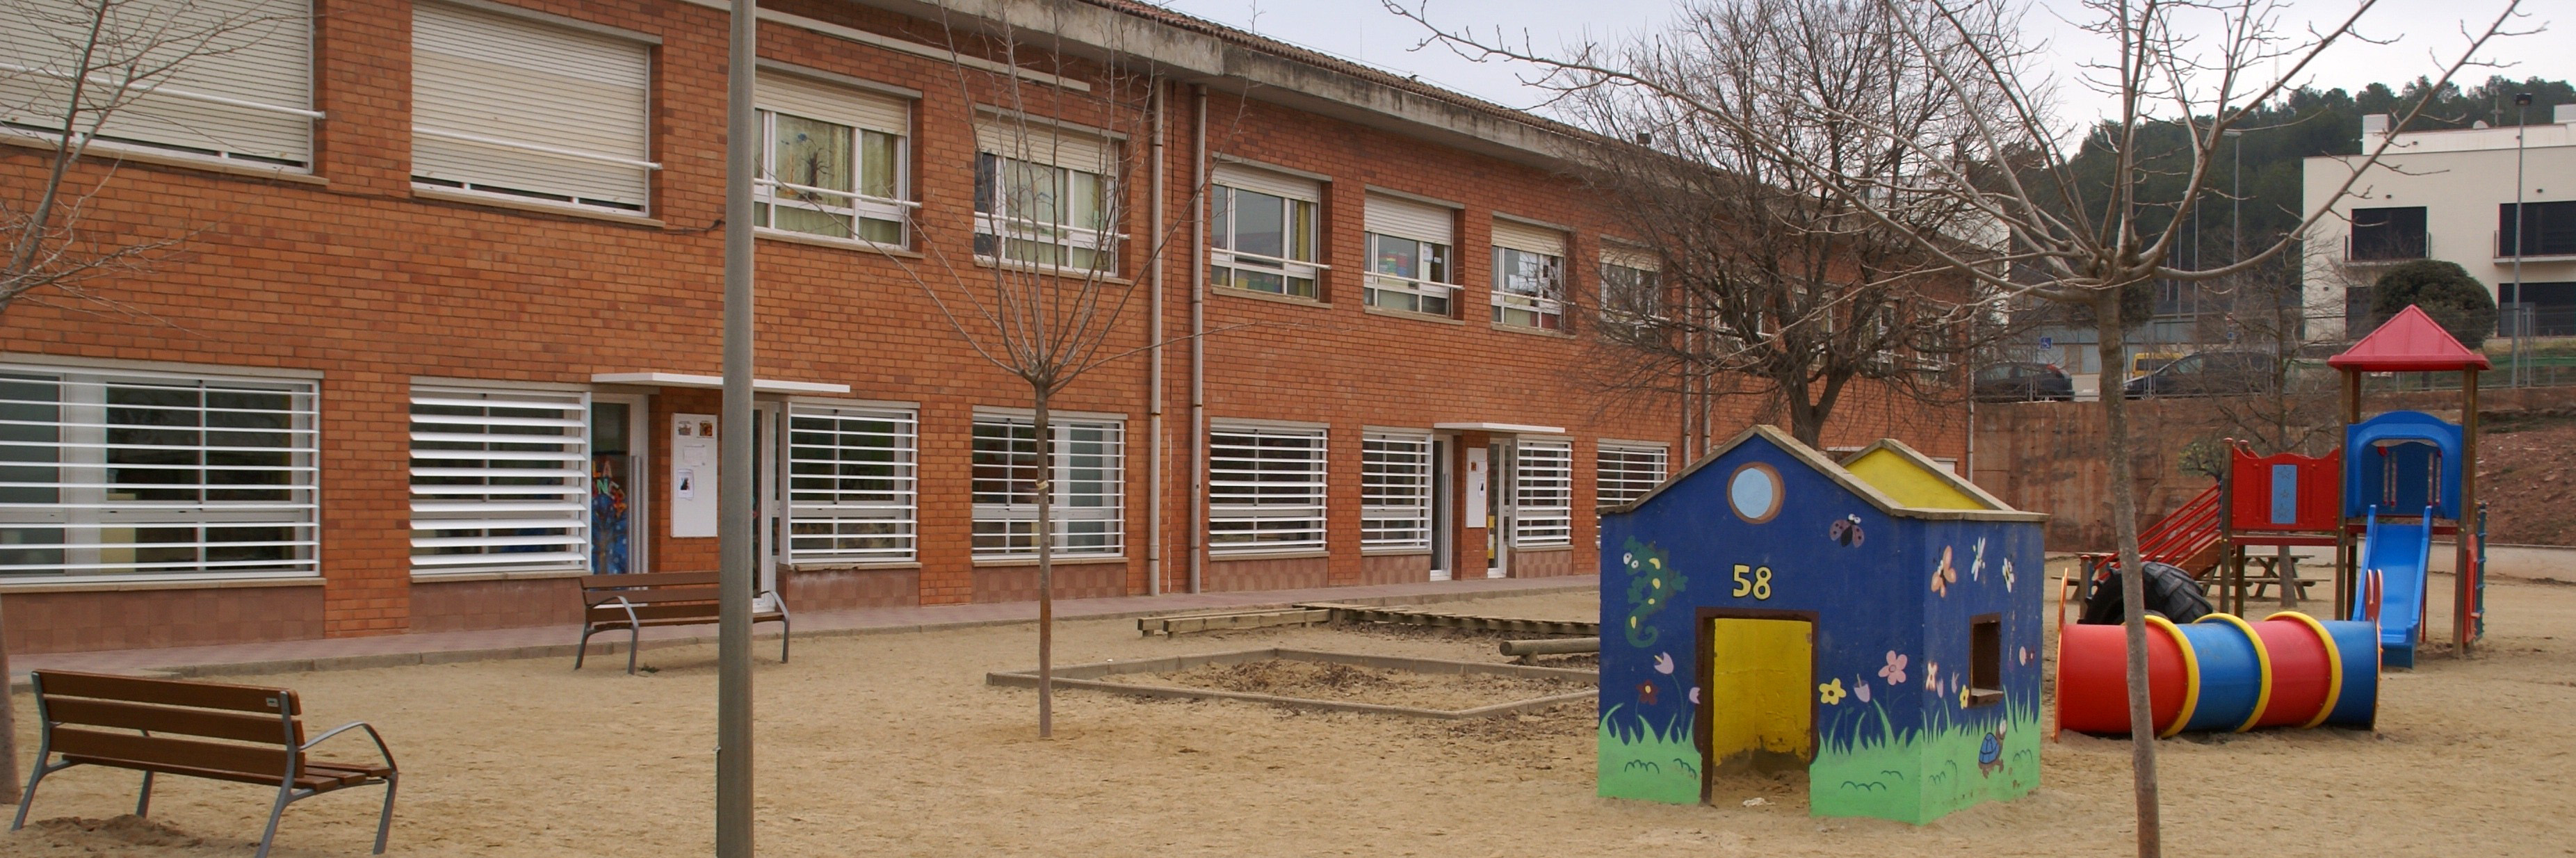 Escola pública Monsenyor Gibert